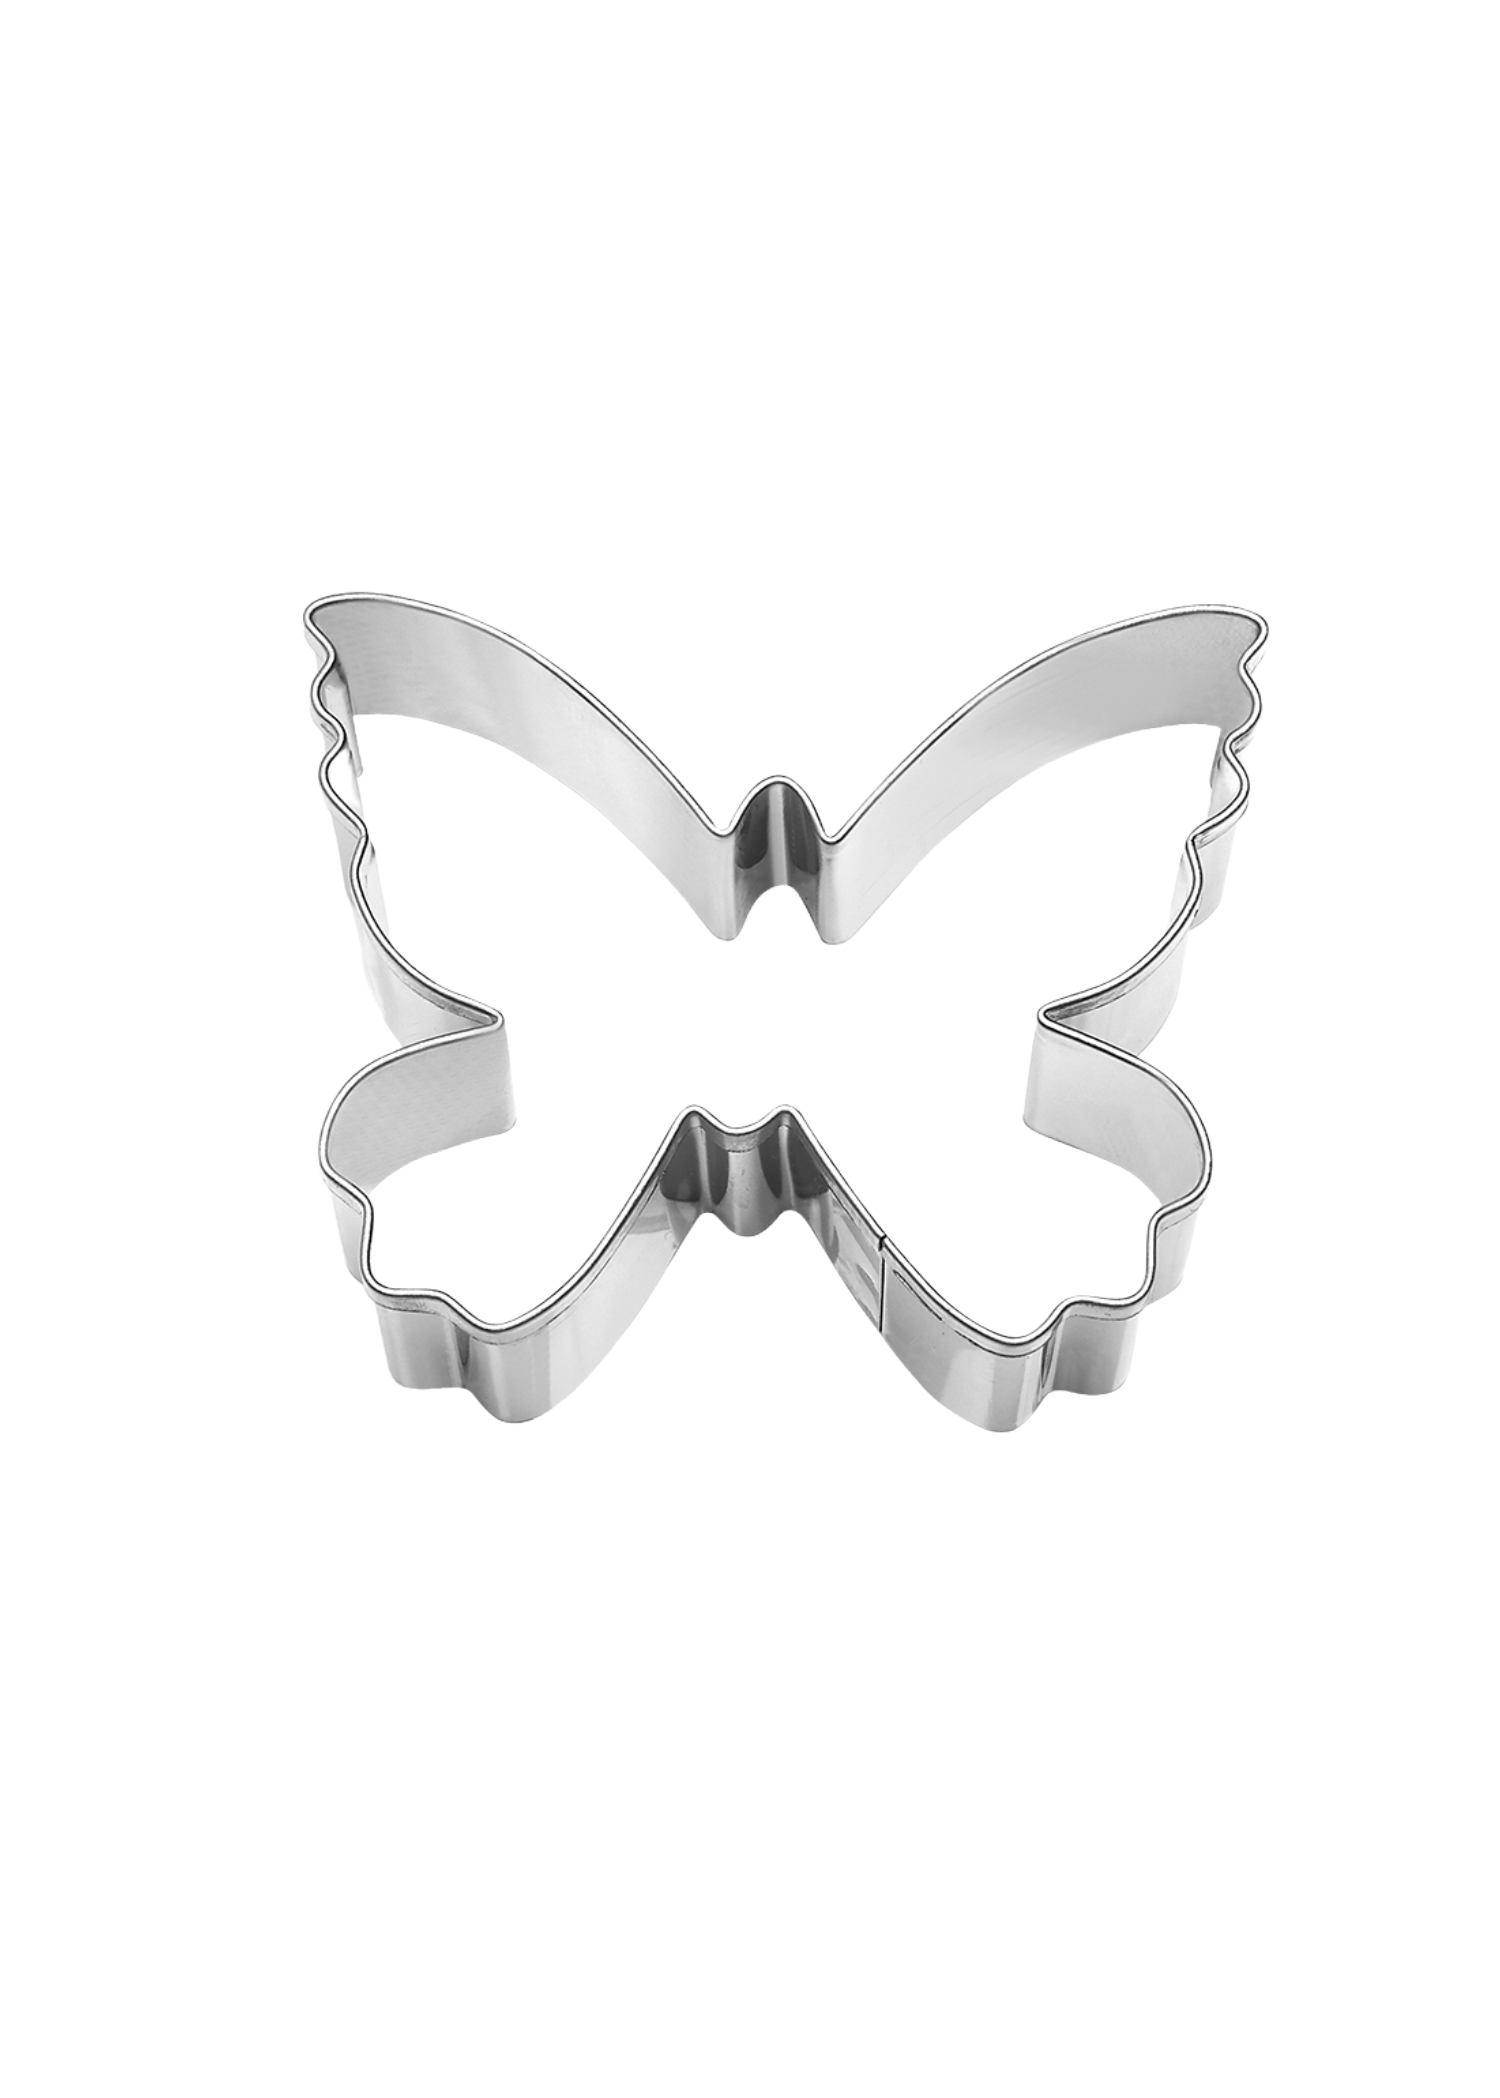 Ausstechform Schmetterling, 7 cm, Edelstahl